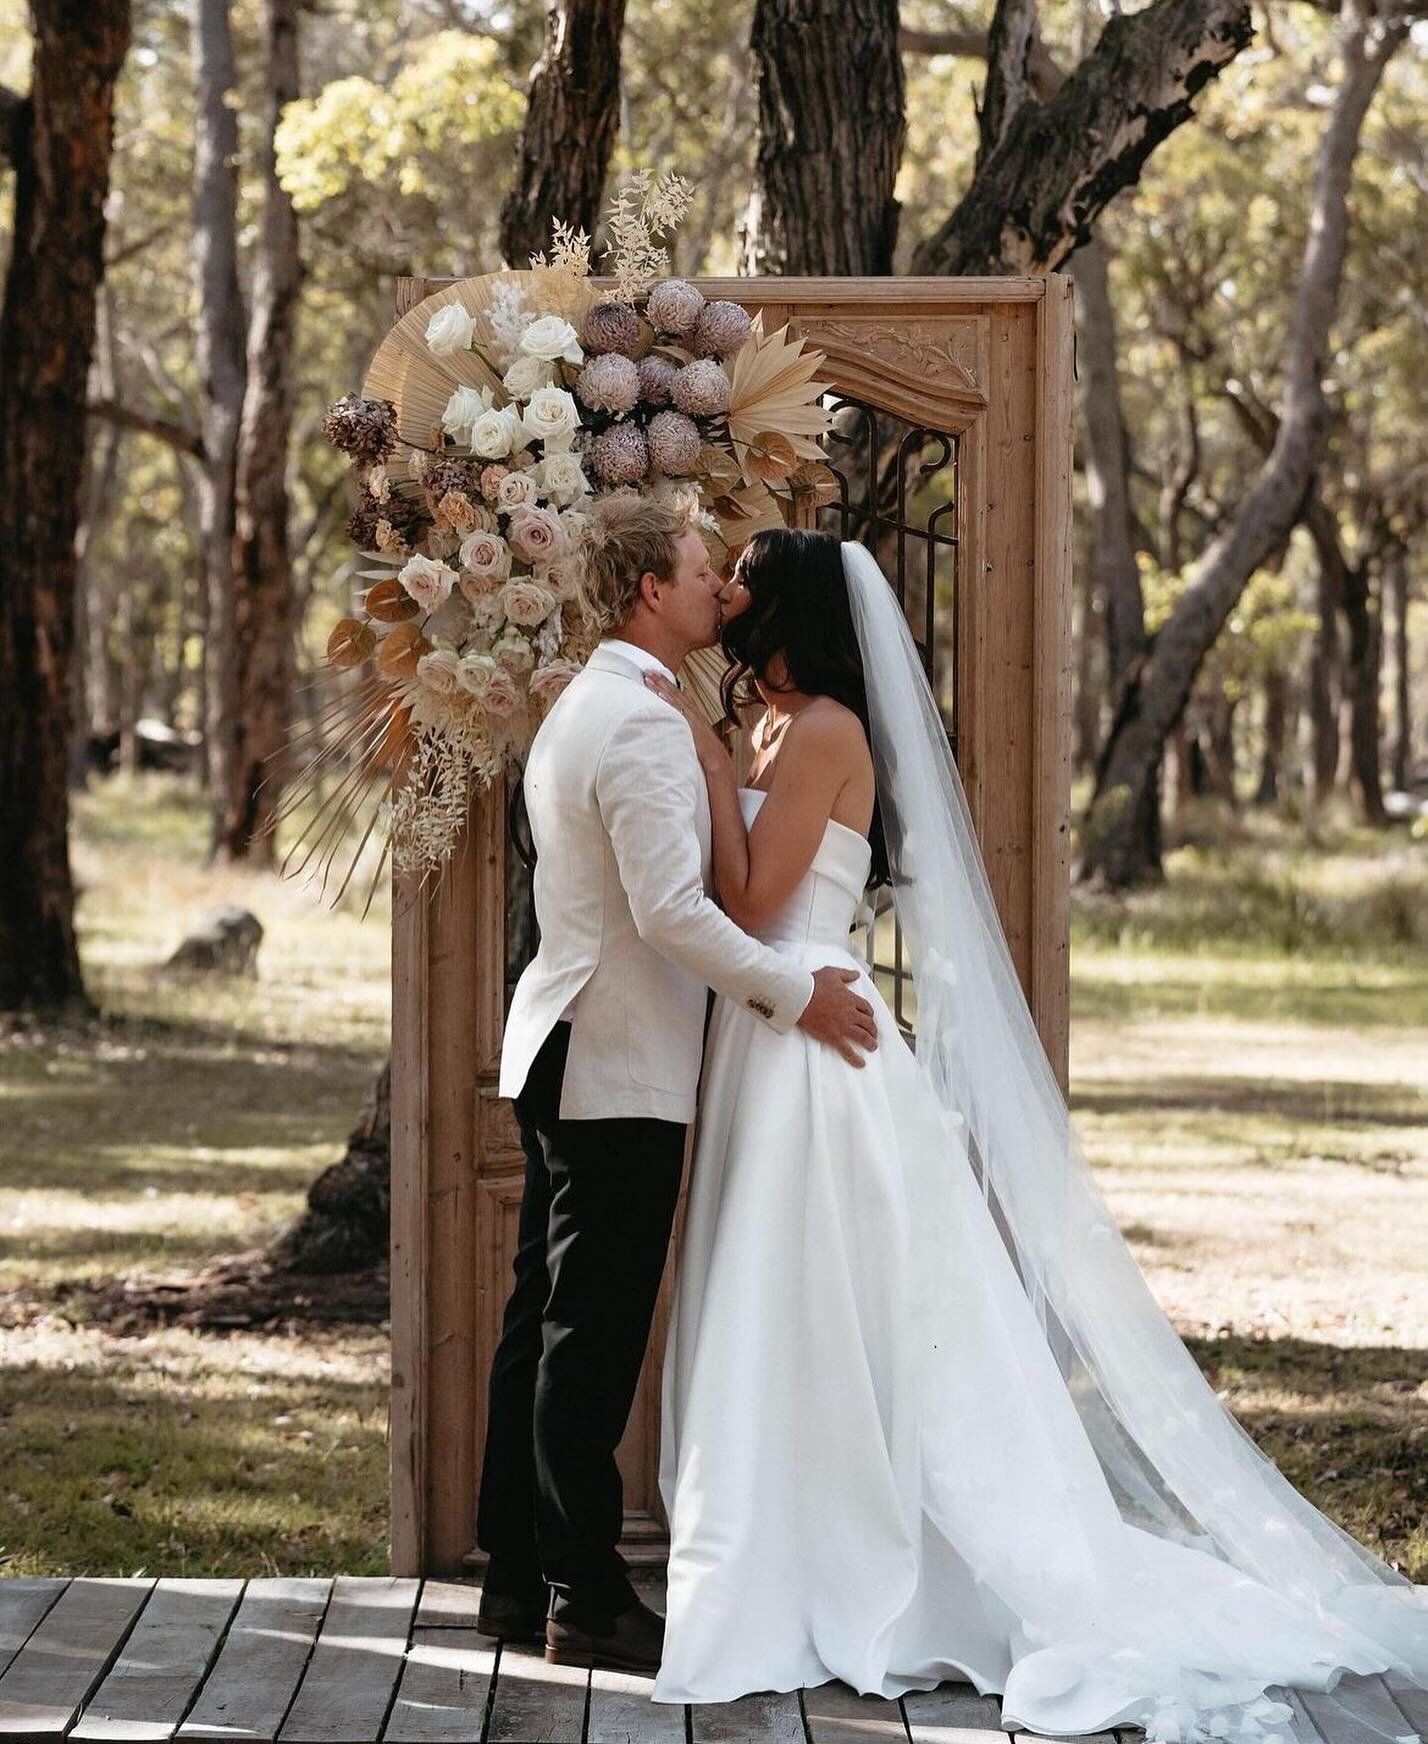 Todd and Grace 🩷

#albanyweddings #greatsouthernweddings #married #marrydownsouth #lushfloraldesigns #albanyflorist #bride #groom #bridal #styled #greatsouthernweddings